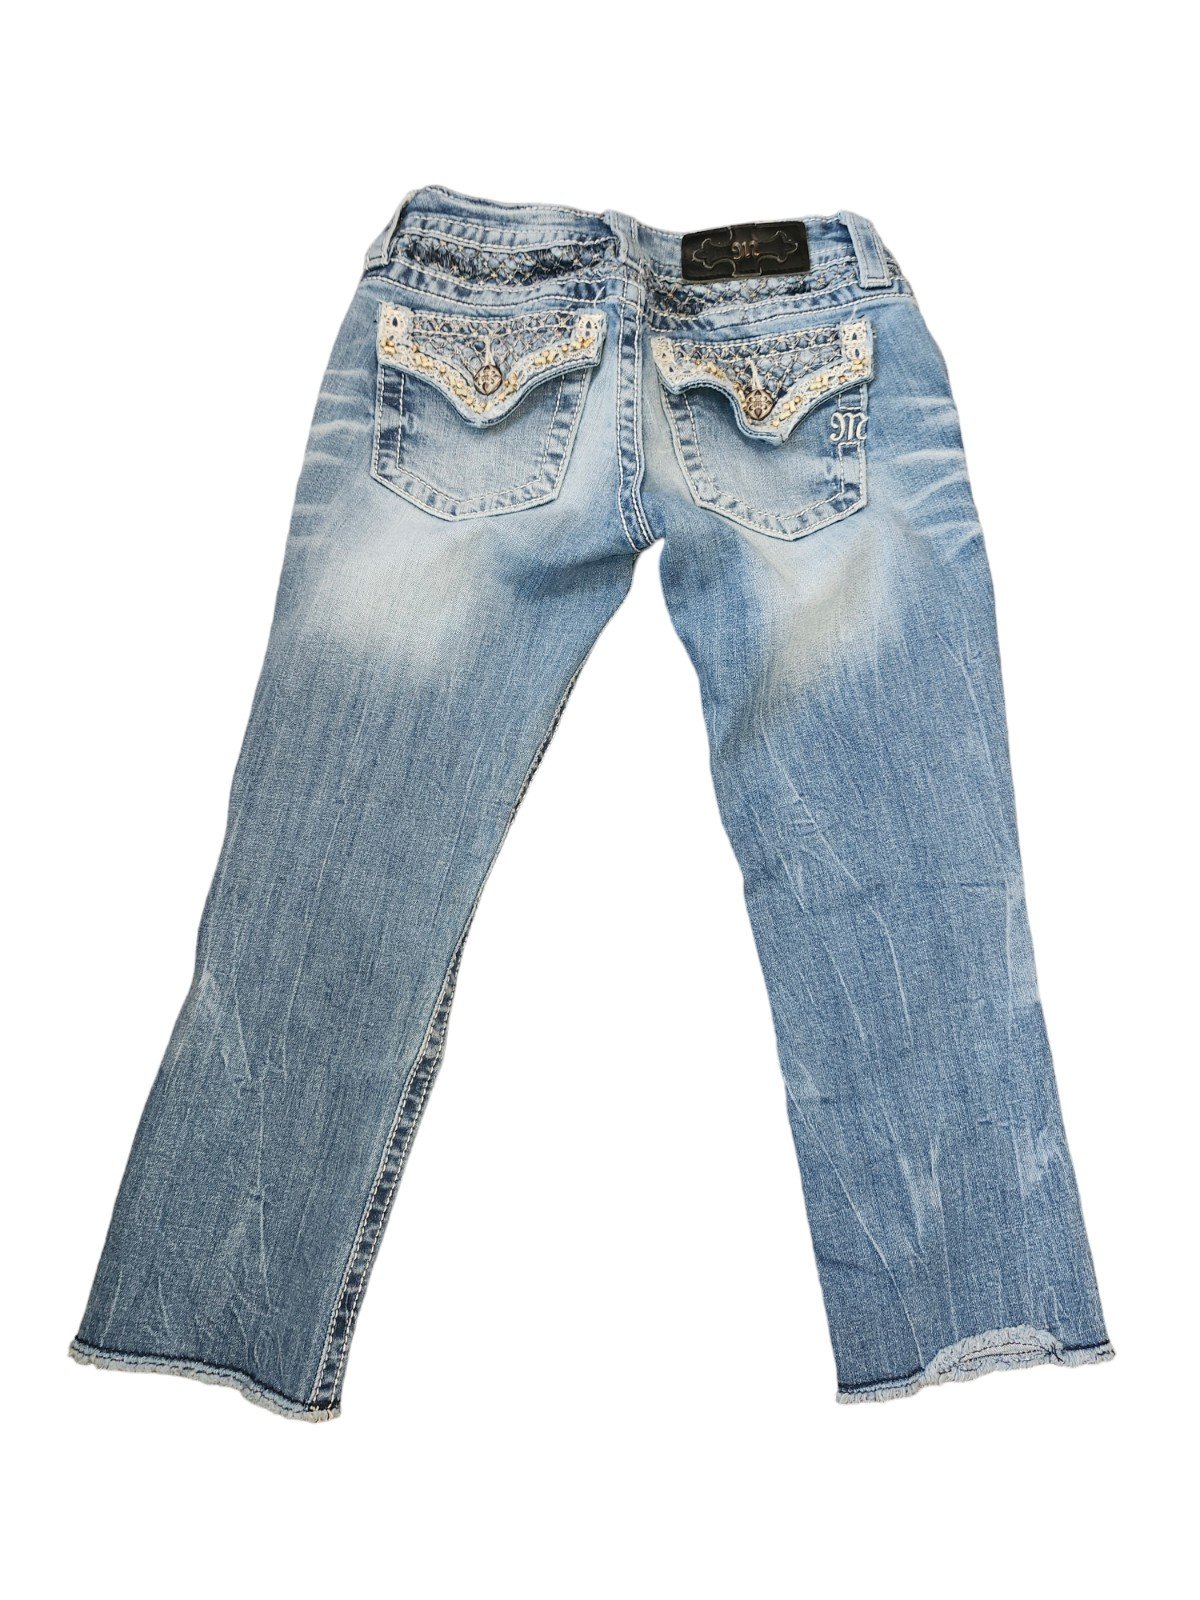 Simple Miss me jeans size 24 KlbvQLiD0 Factory Price